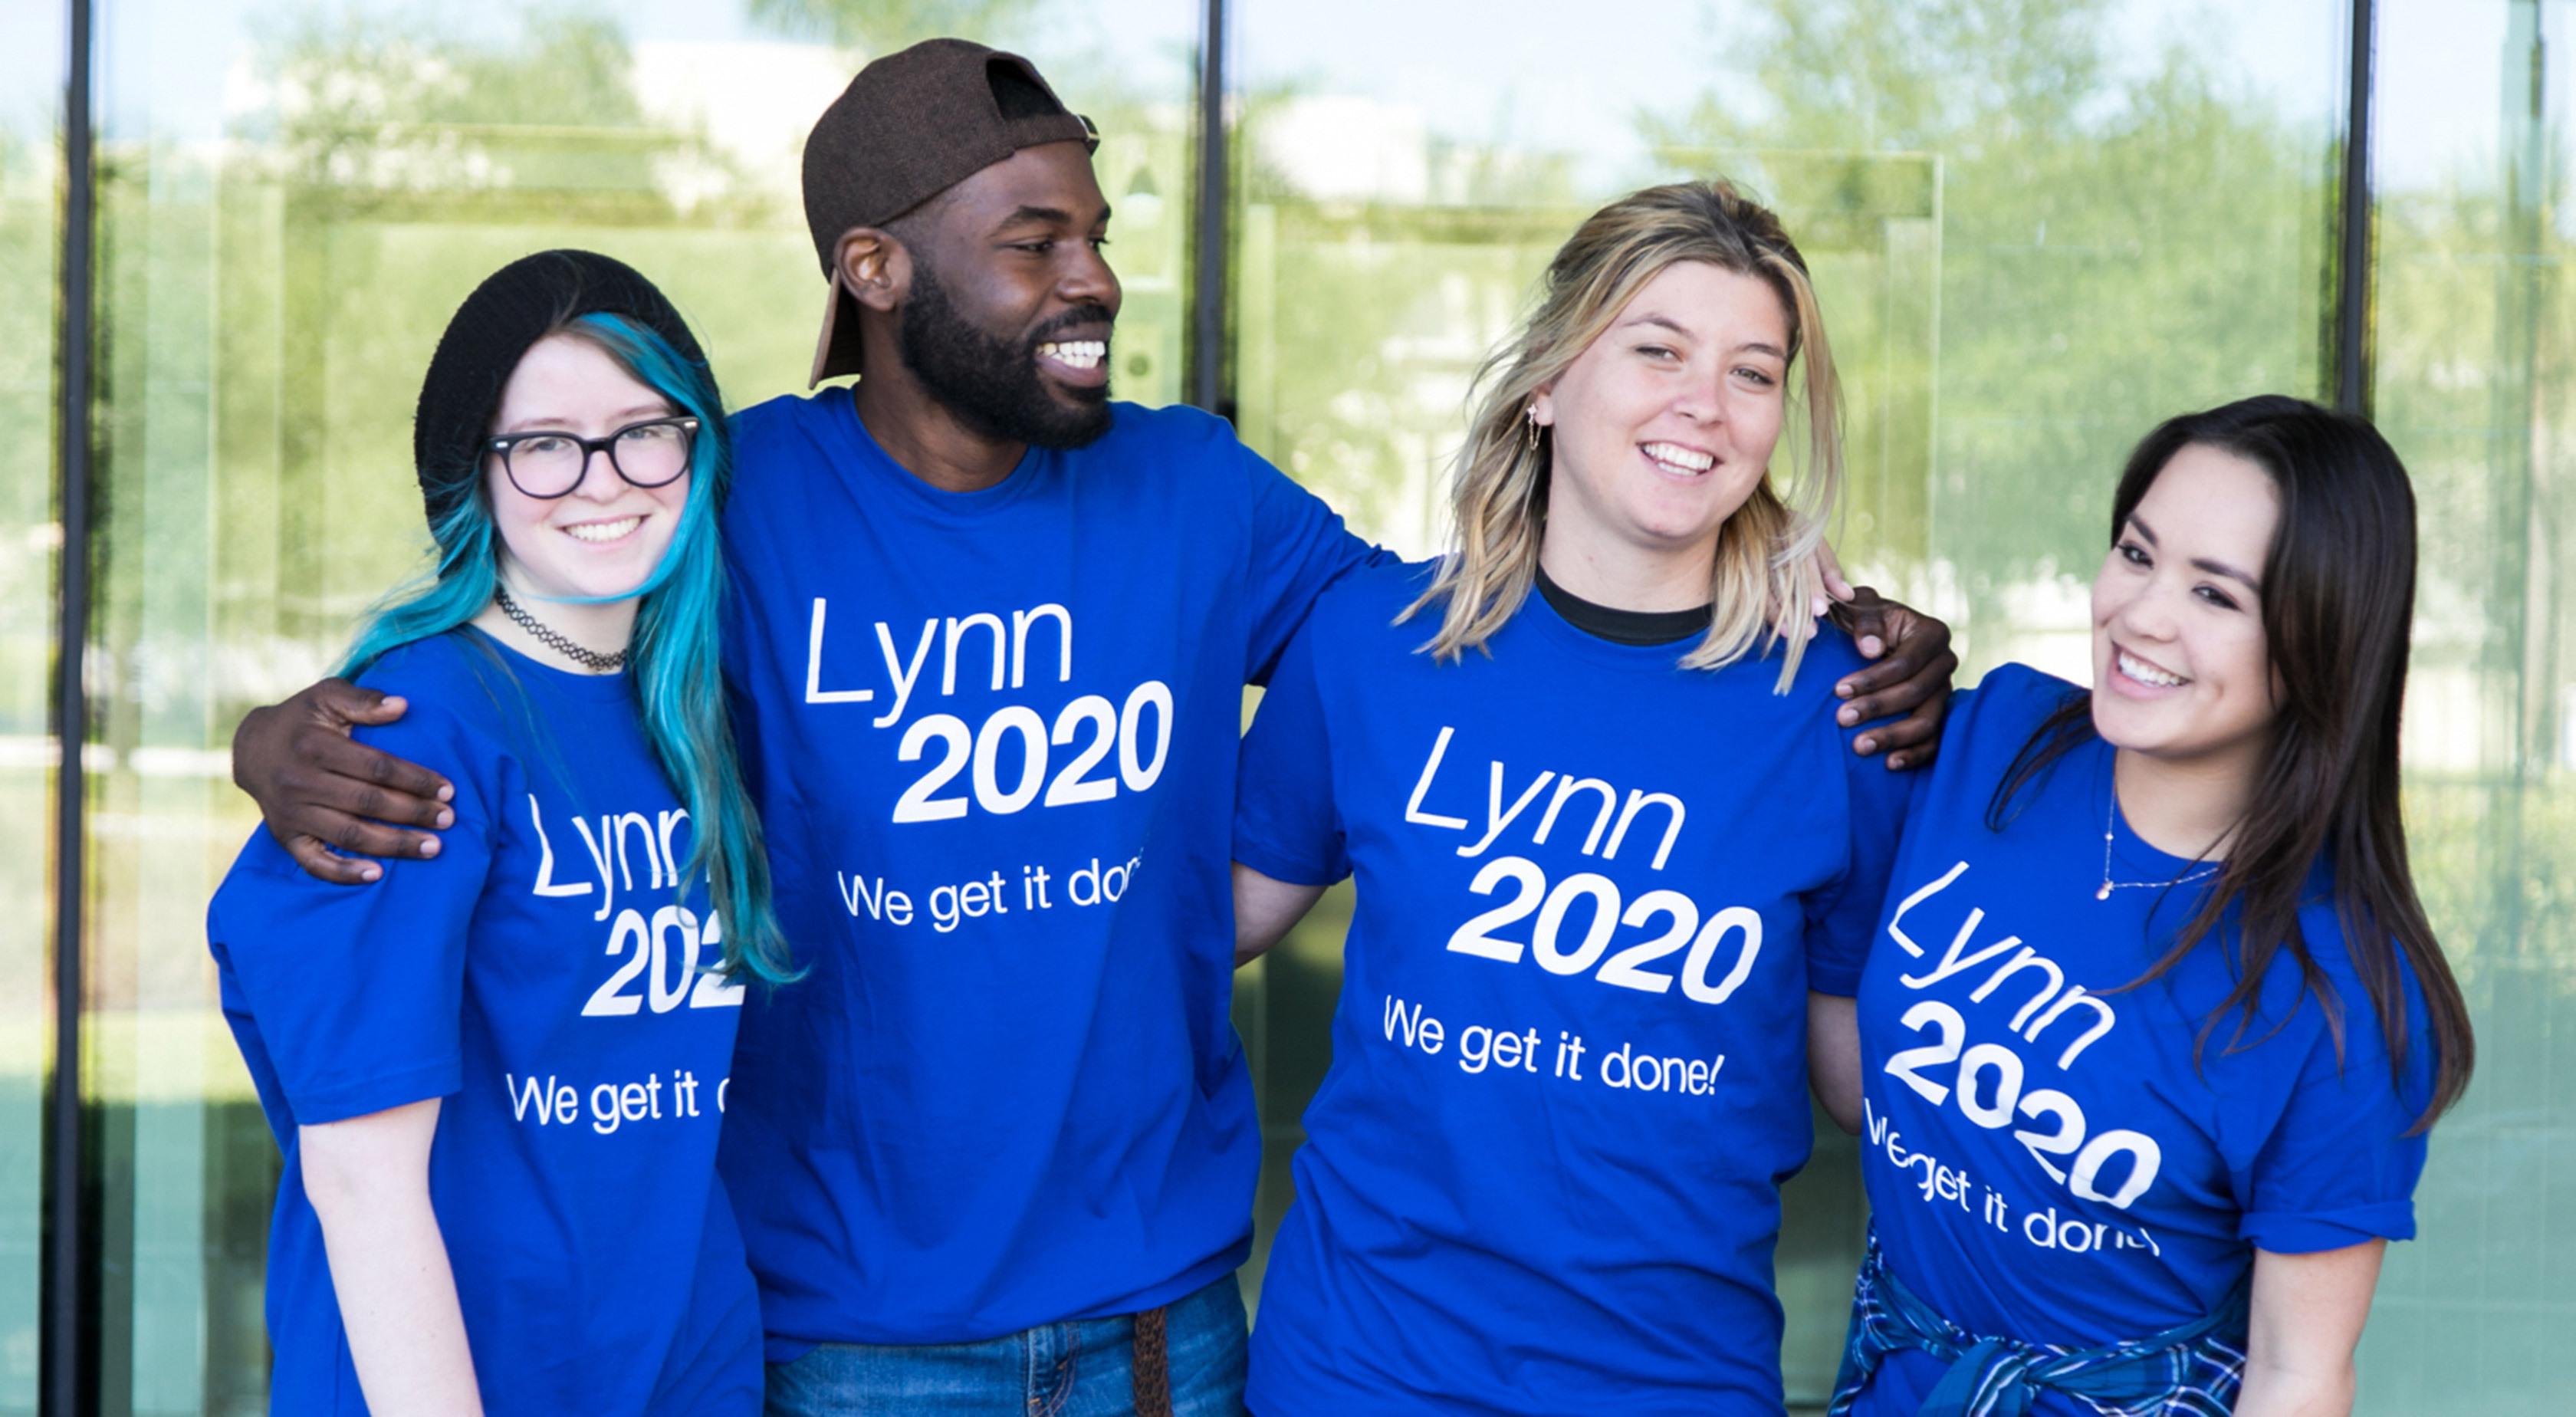 Students supporting Lynn University 2020 plan